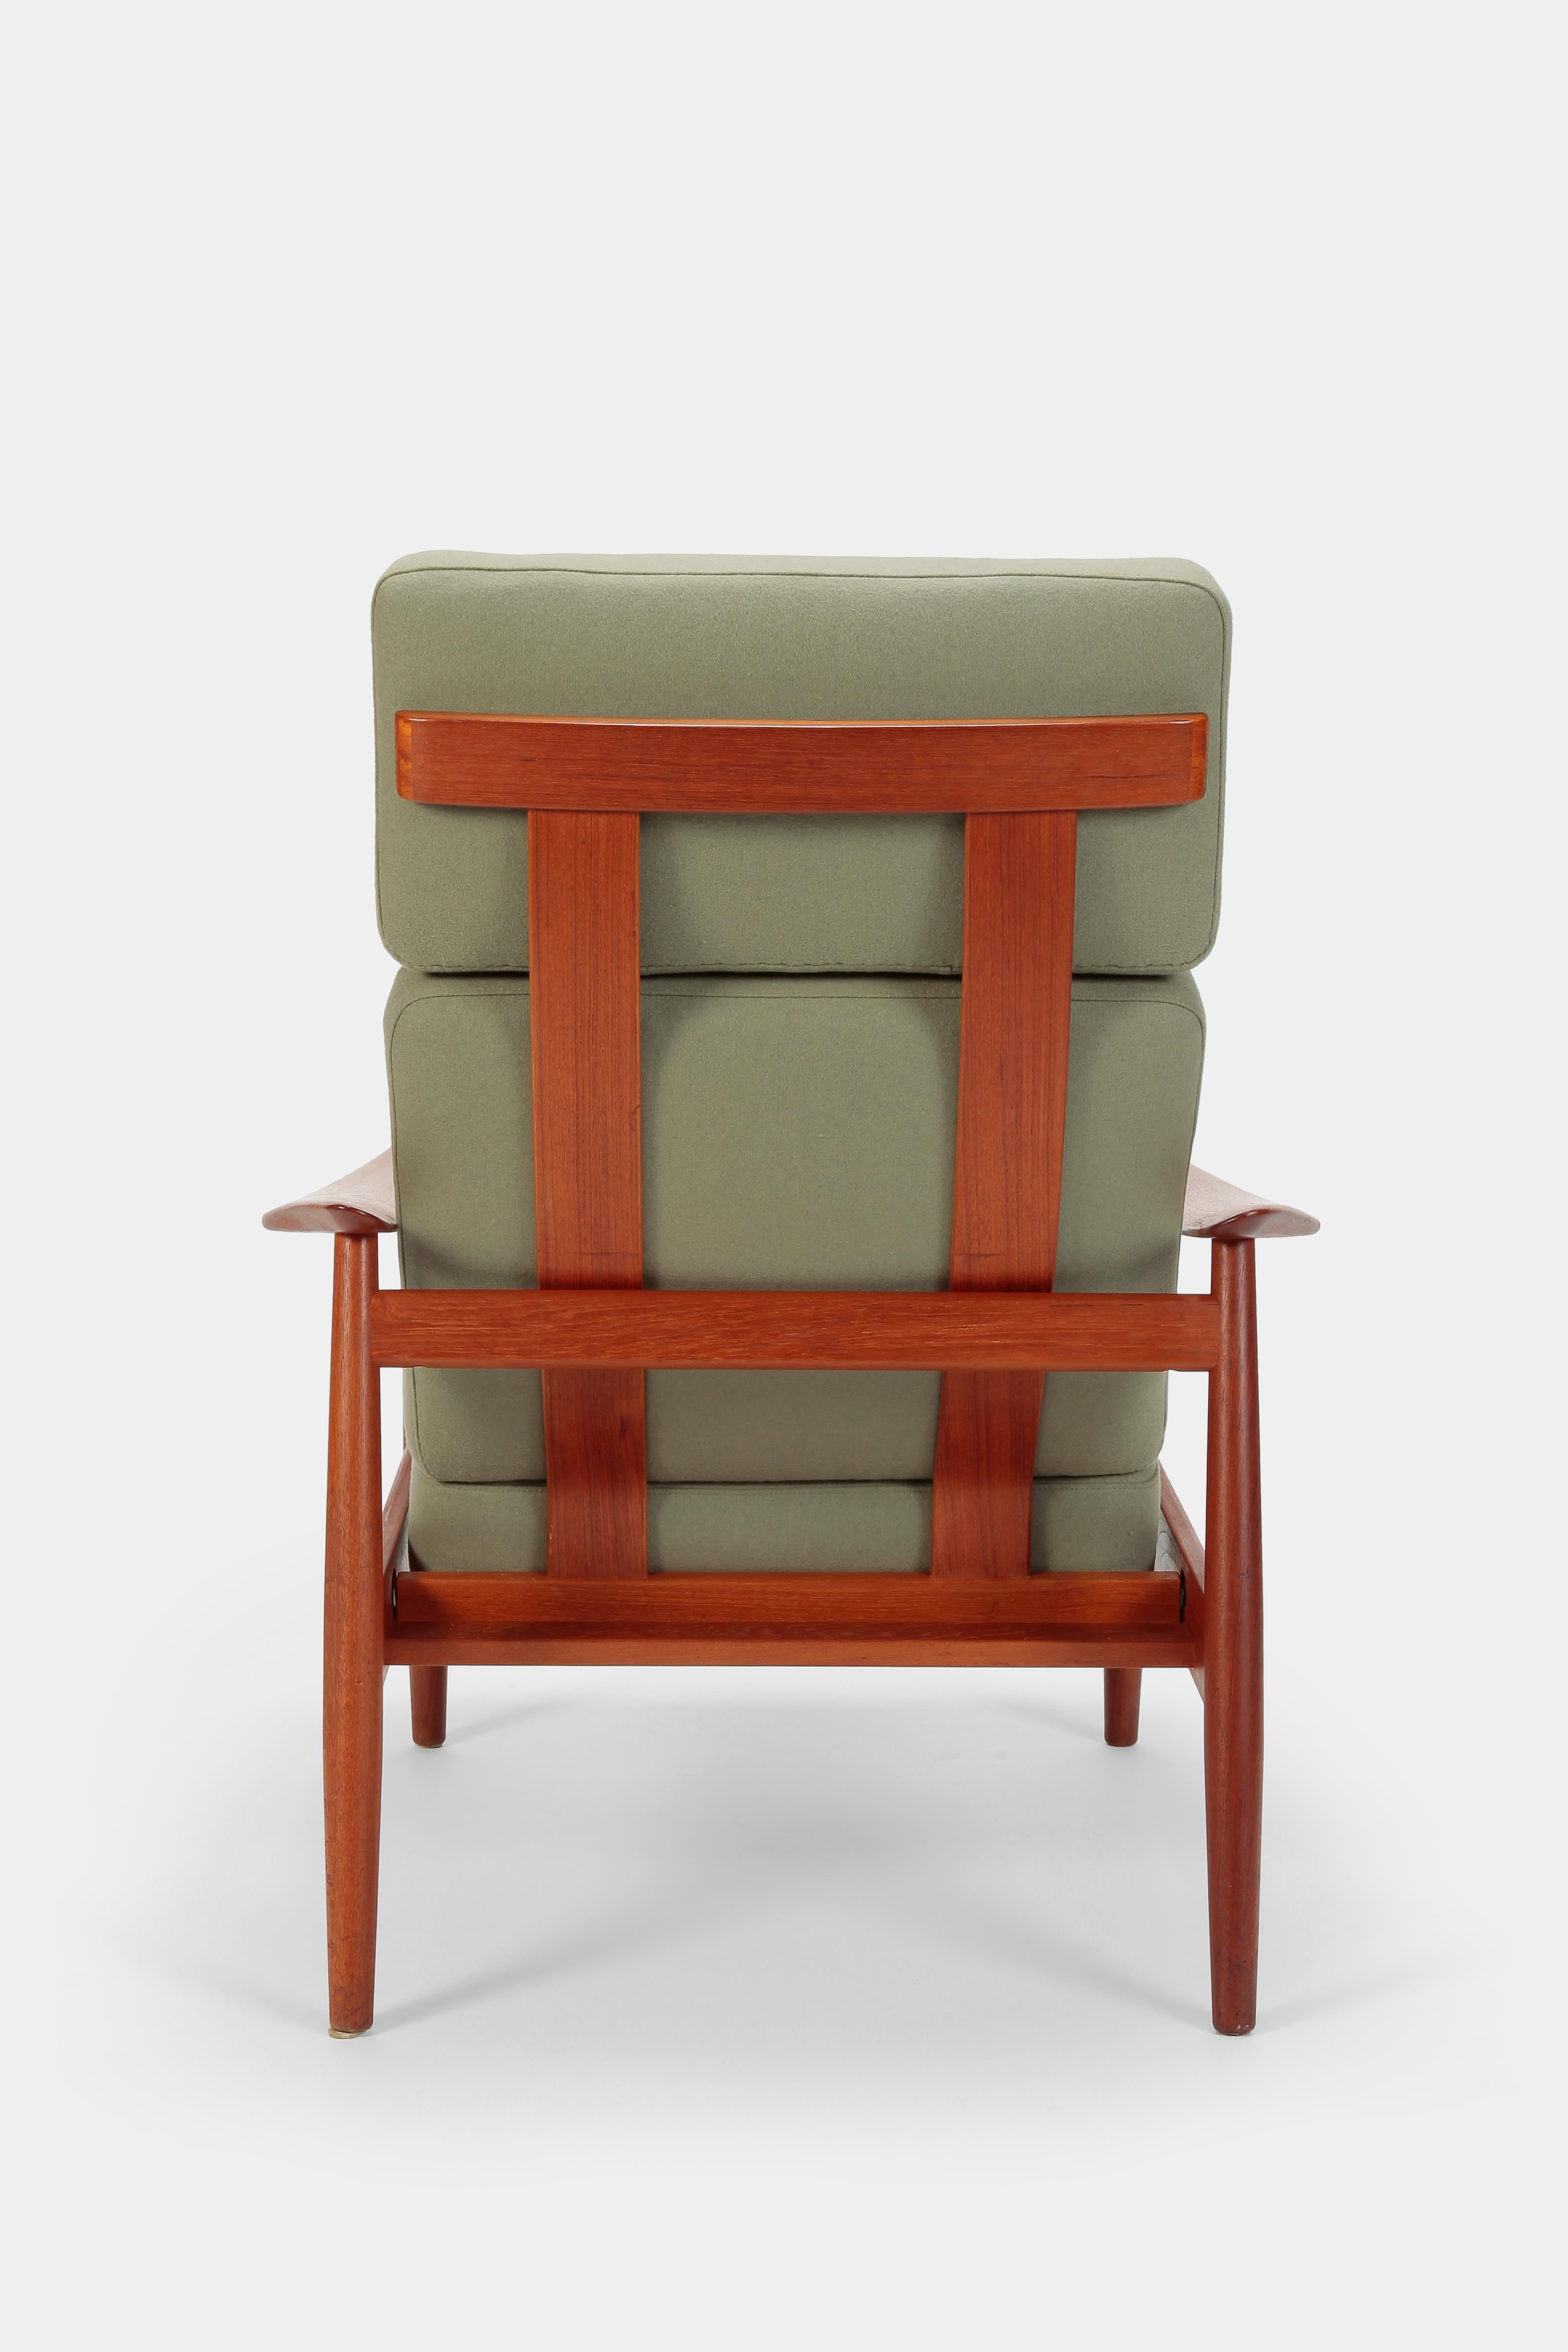 2 Arne Vodder High Back Chairs France & Son Teak, 1960s For Sale 4